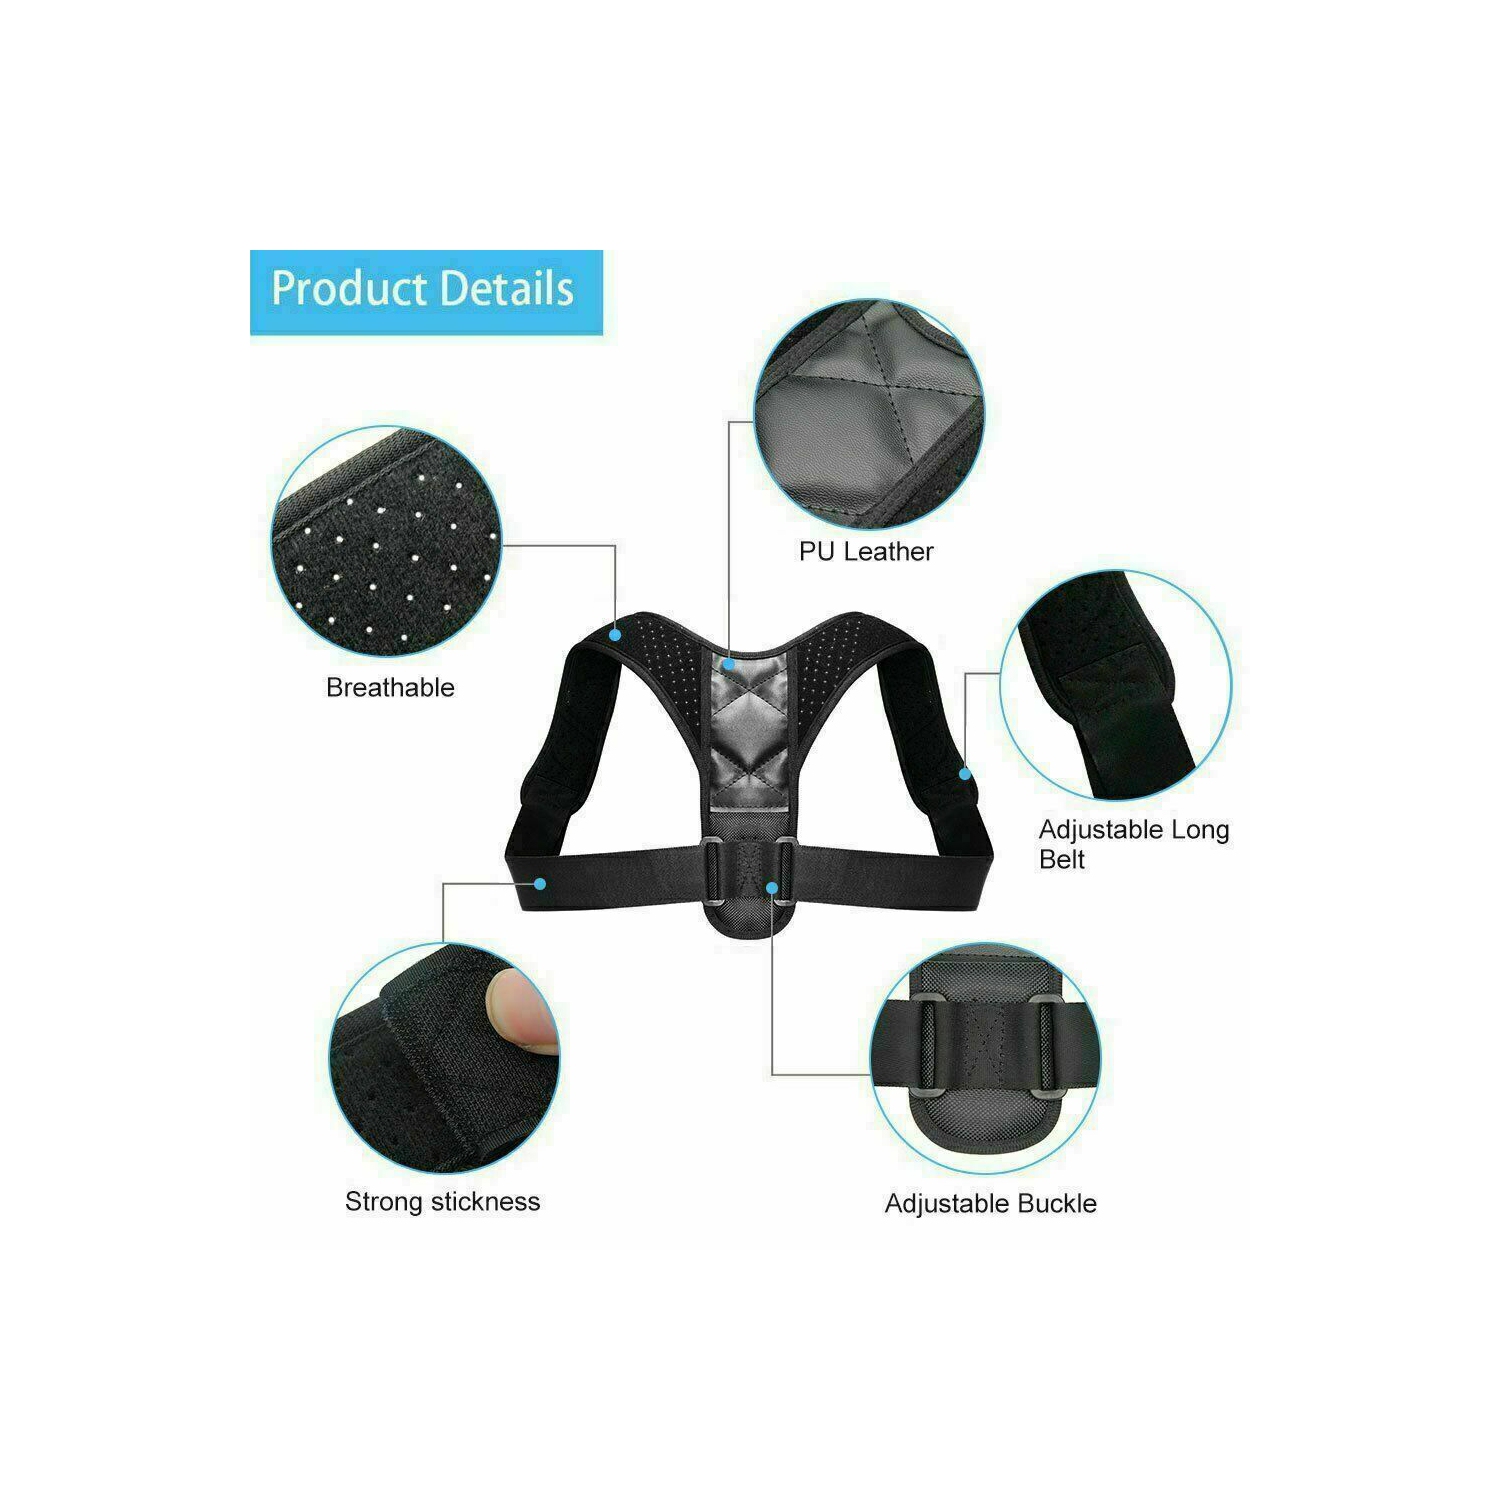 Airavat Posture Corrector - Back Support Belt for Men and Women